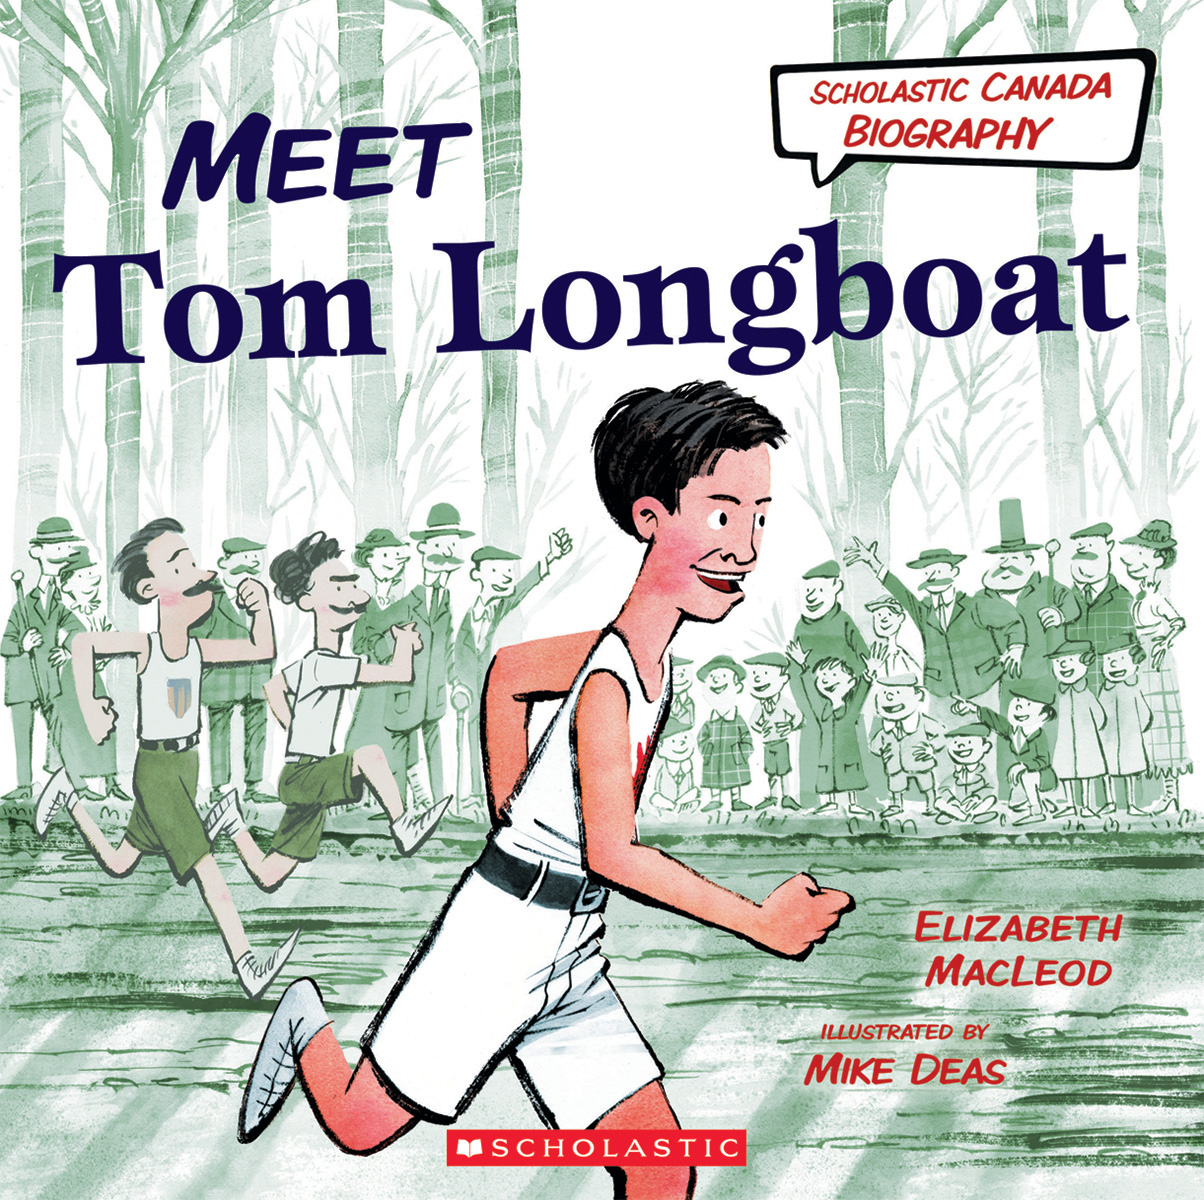  Scholastic Canada Biography: Meet Tom Longboat 